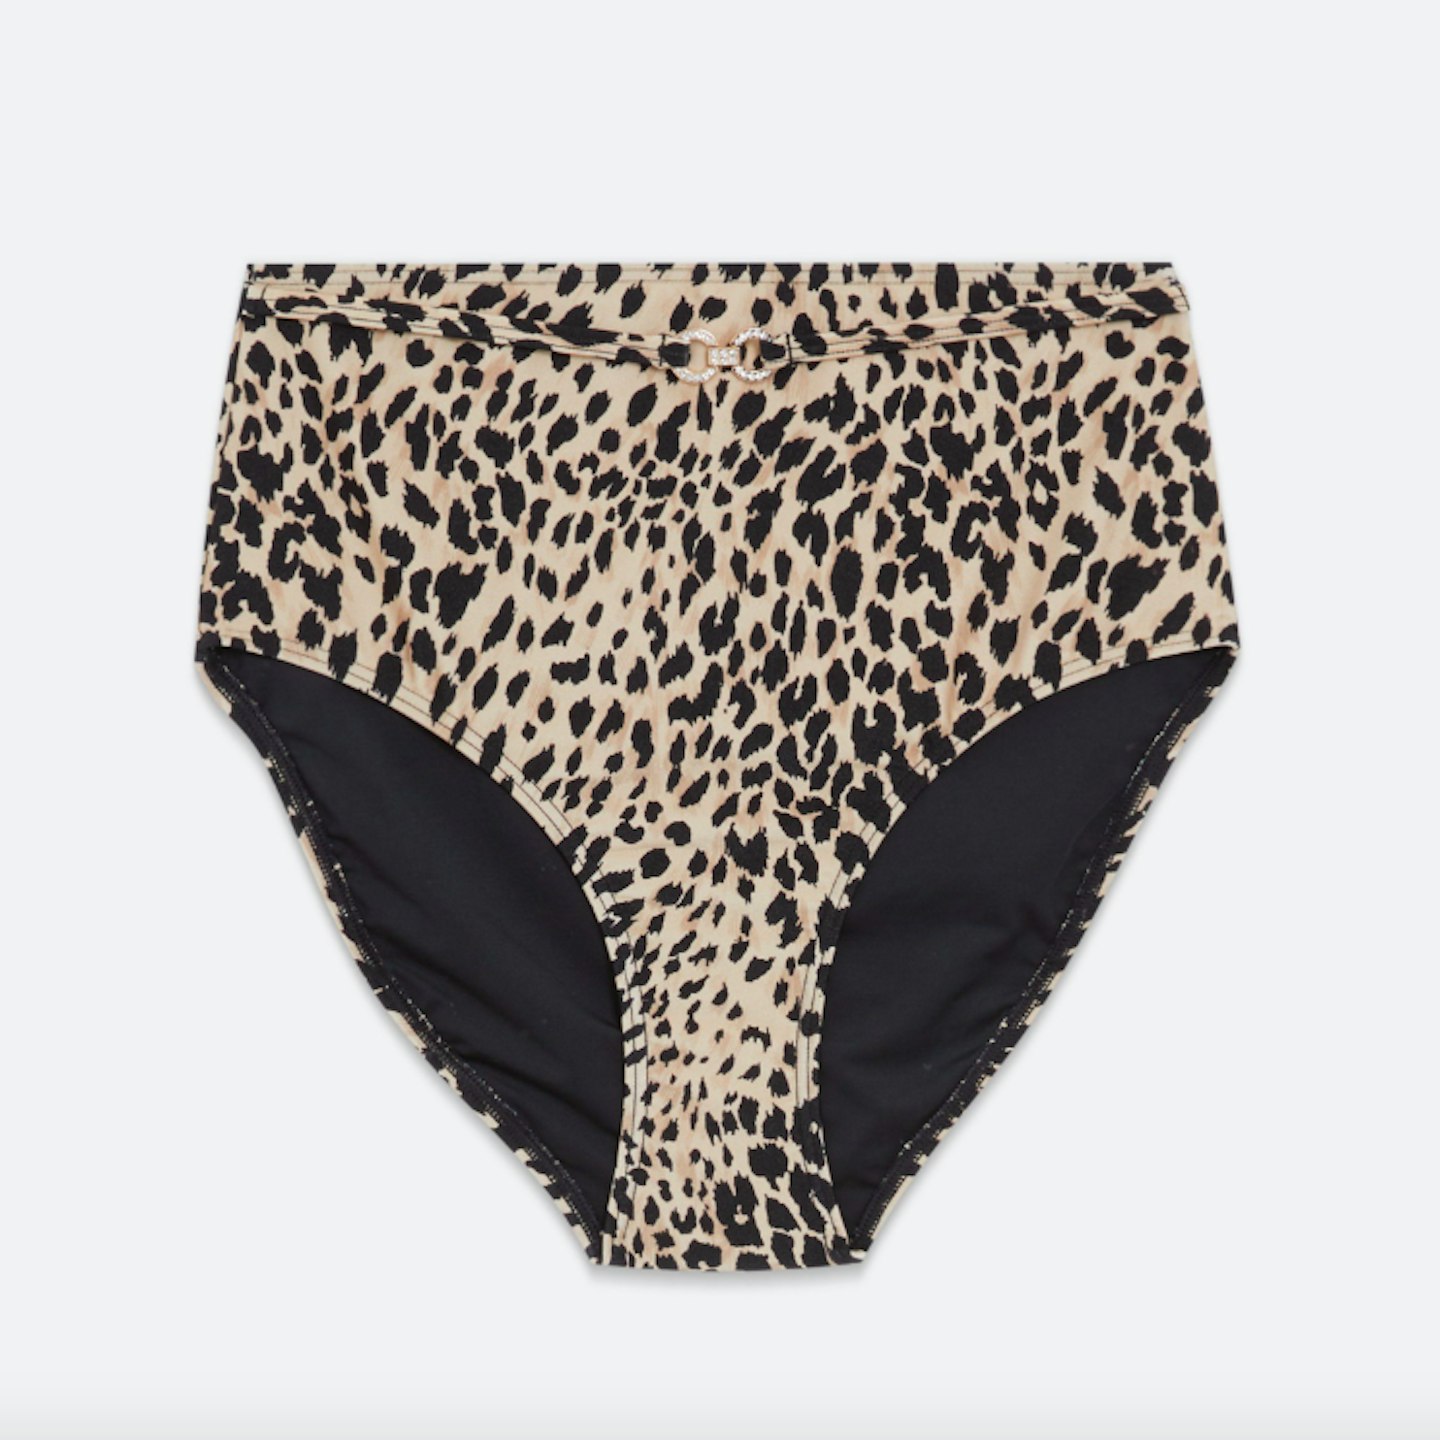 New Look, Leopard Print High-Waist Bikini Bottoms, £13.99